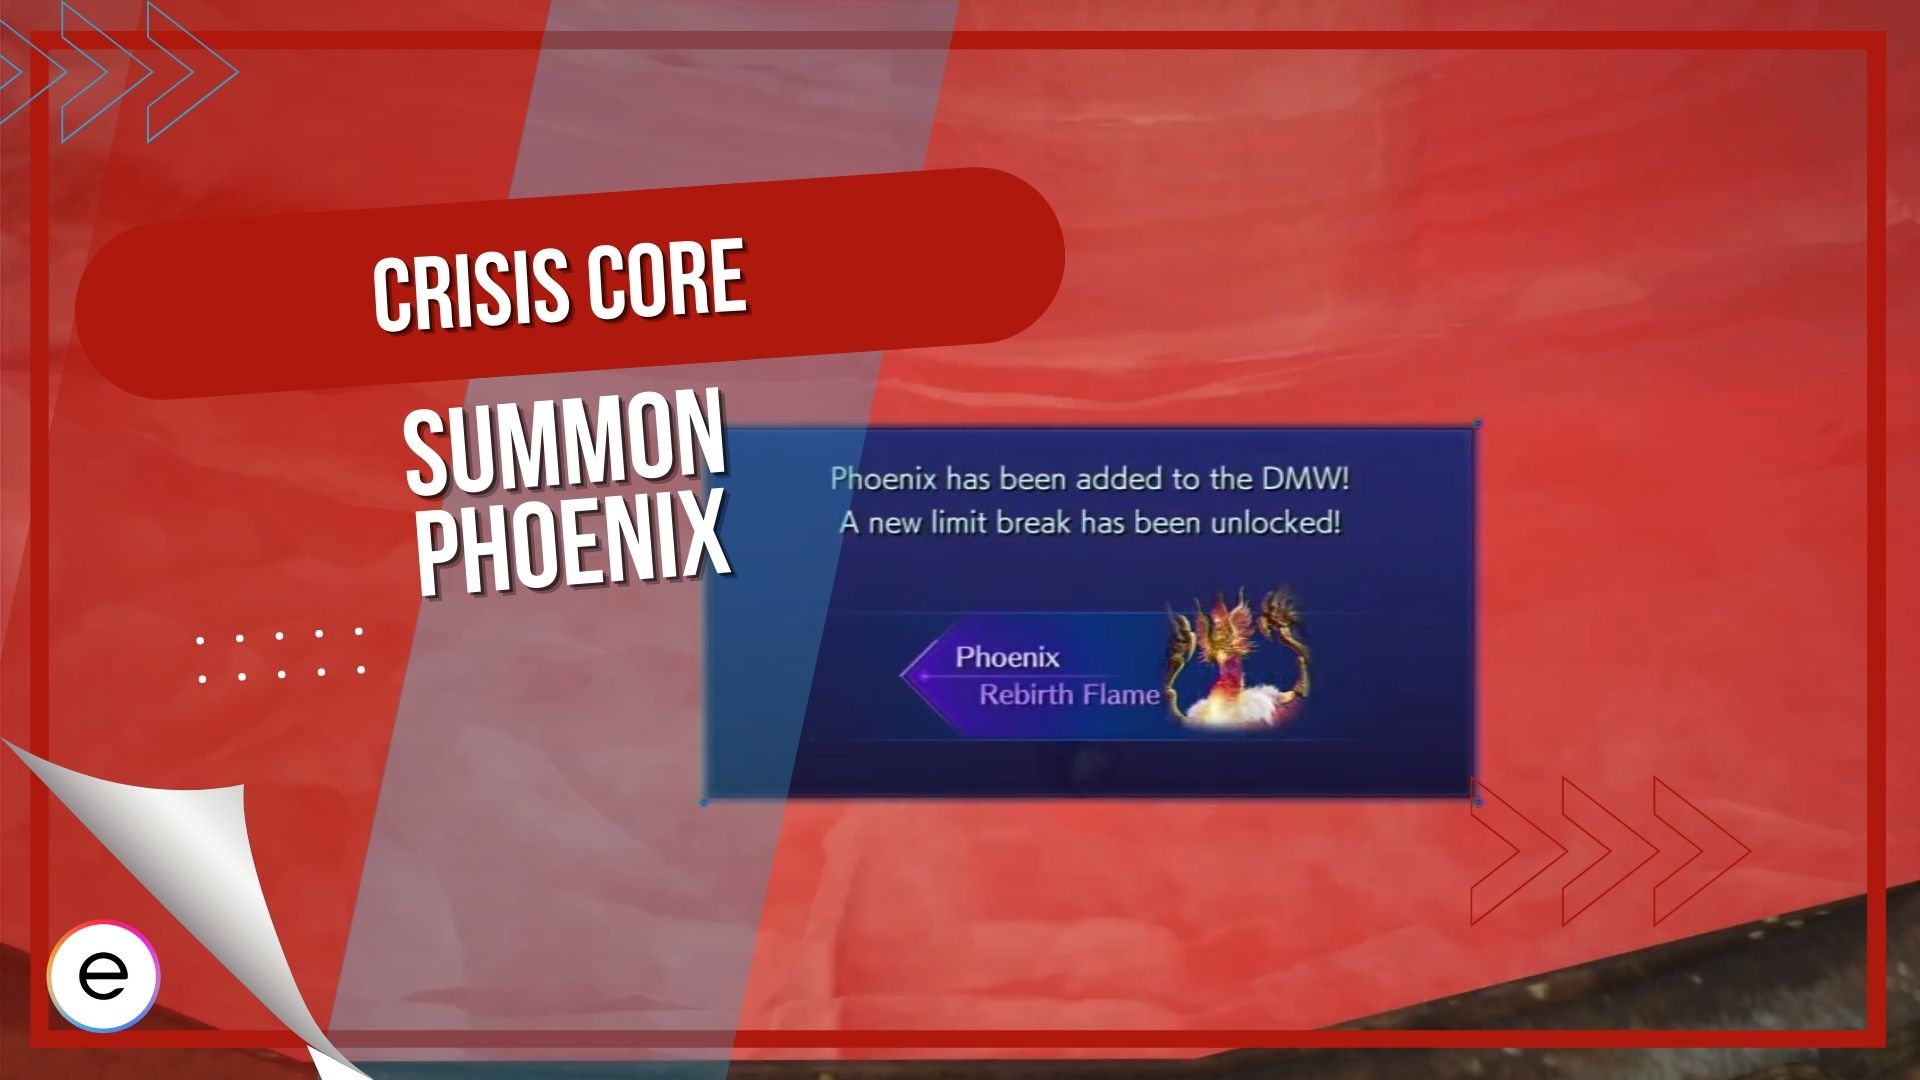 Summoning Phoenix in Crisis Core